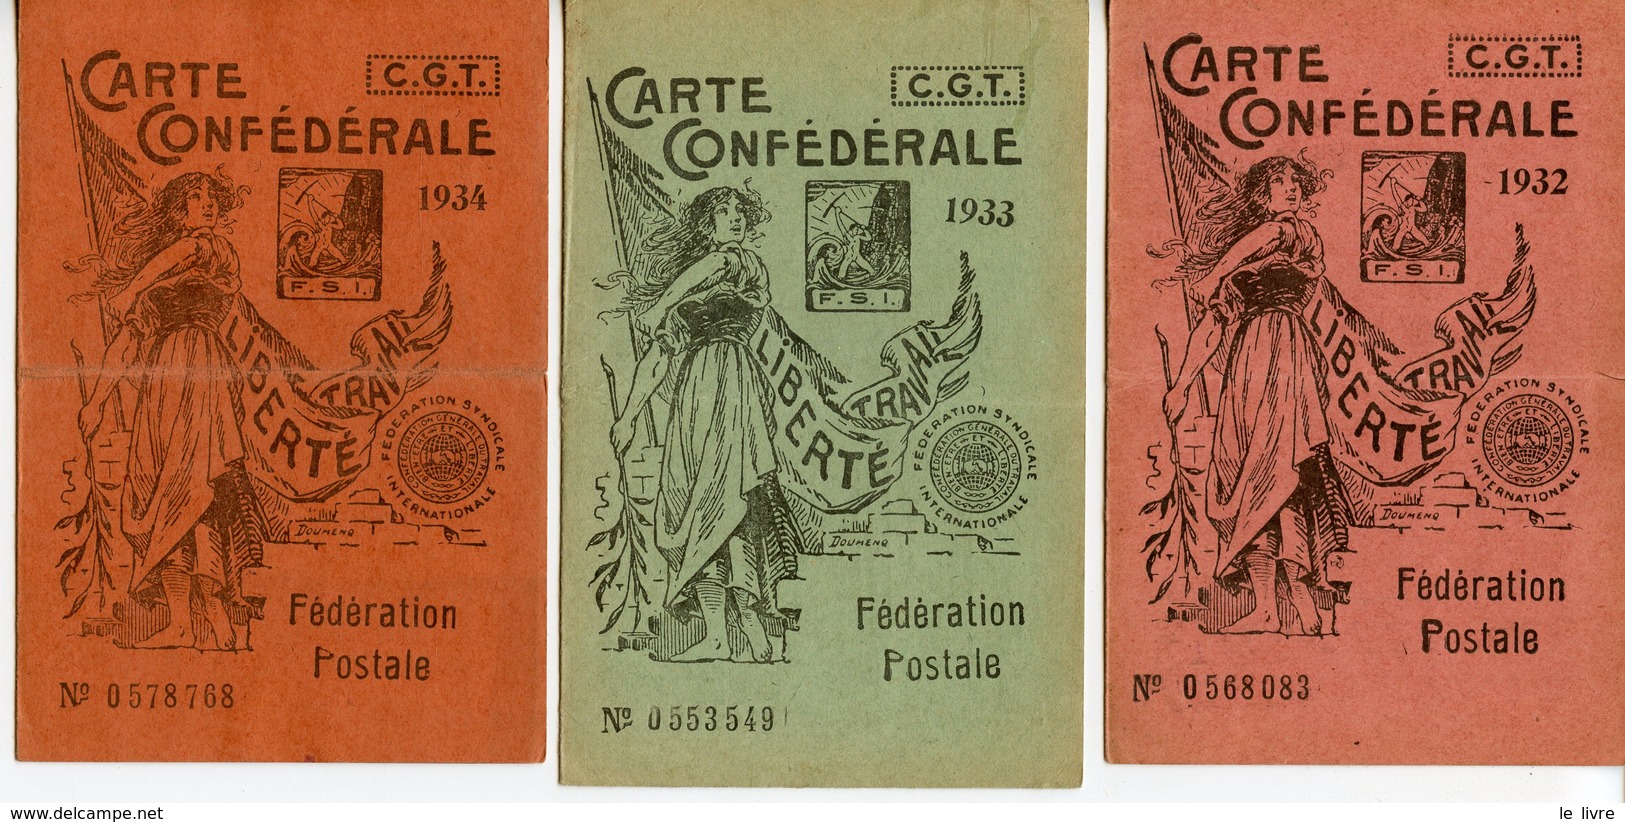 1282. LOT DE 3 CARTES CONFEDERALES CGT DE LA FEDERATION POSTALE 1932 1933 1934 - Unclassified